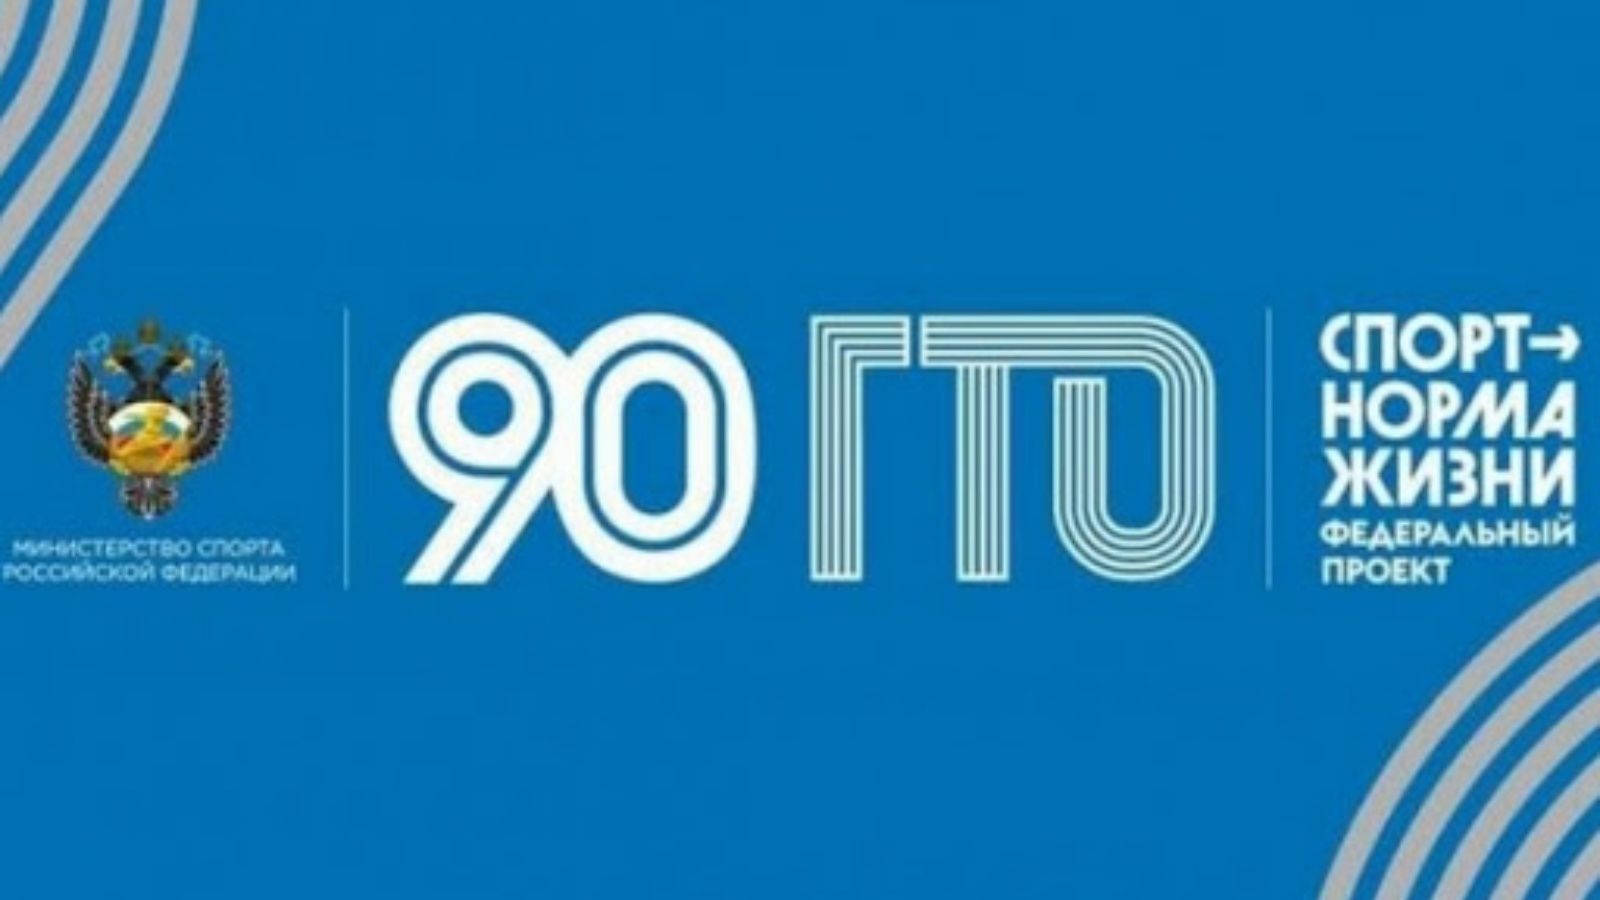 Гто 90. ГТО логотип. Фирменный стиль комплекса ГТО. ГТО юбилей. Логотип 90 лет.